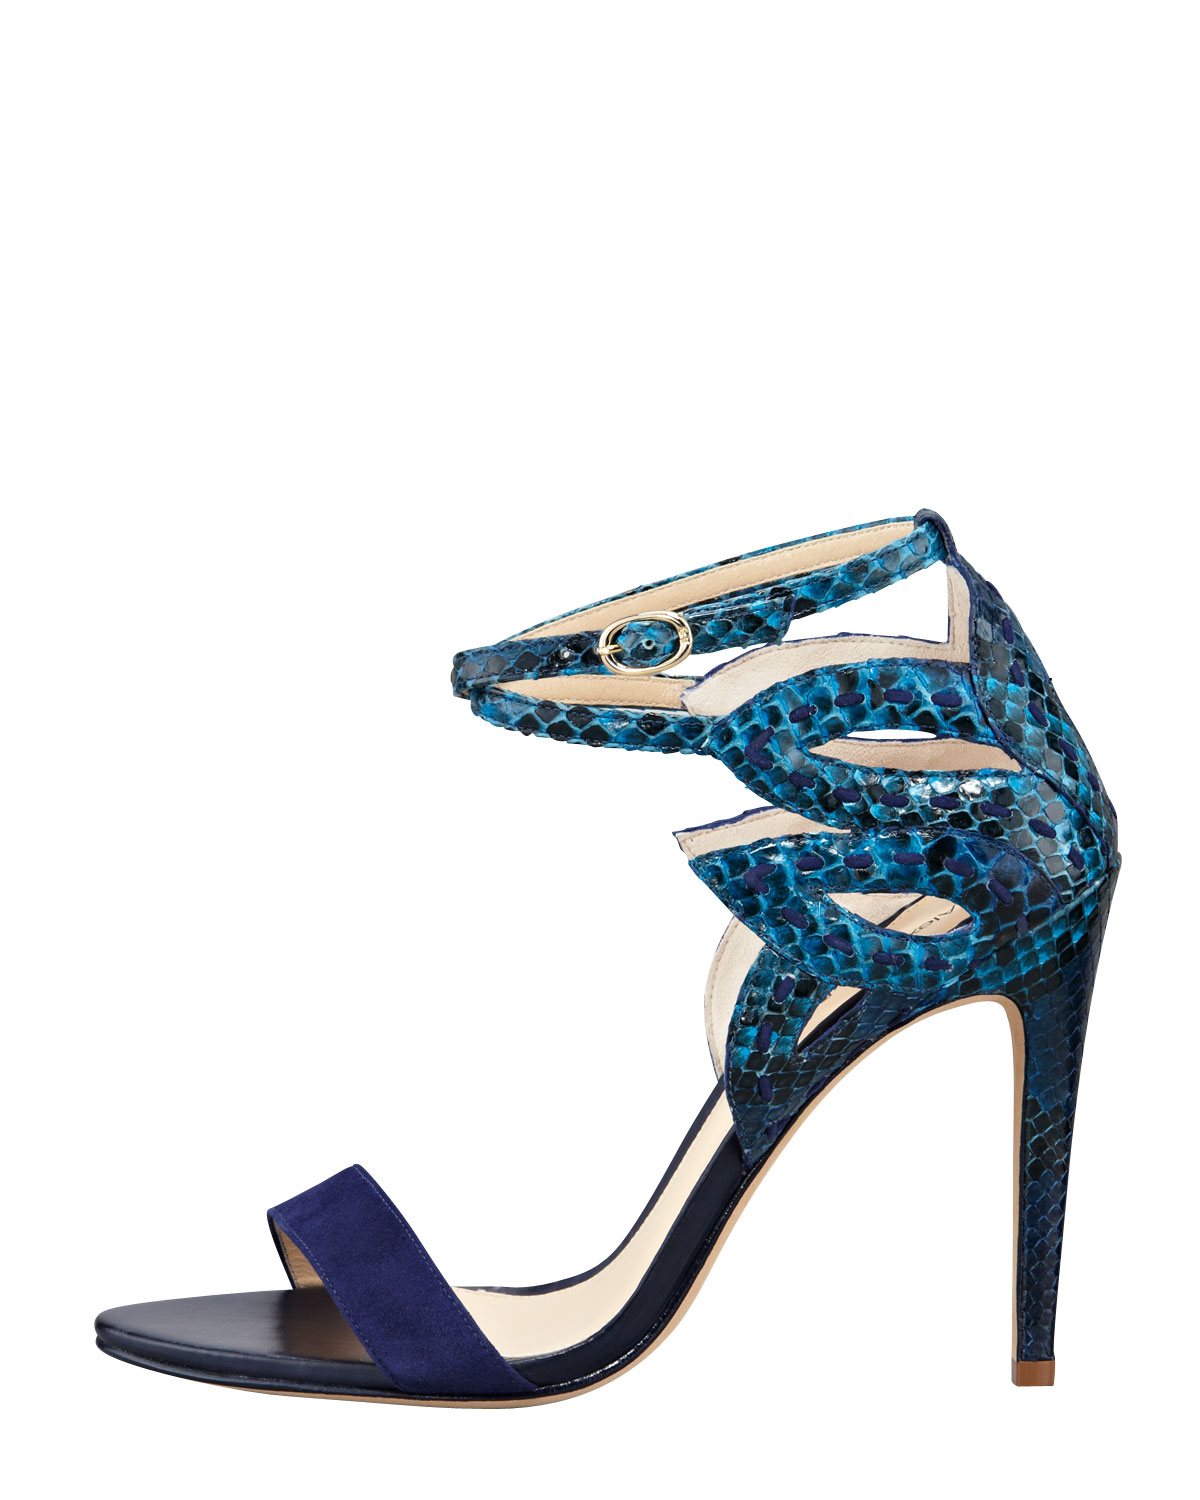 Lyst - Alexandre Birman Python Anklecutout Sandal Blue in Blue